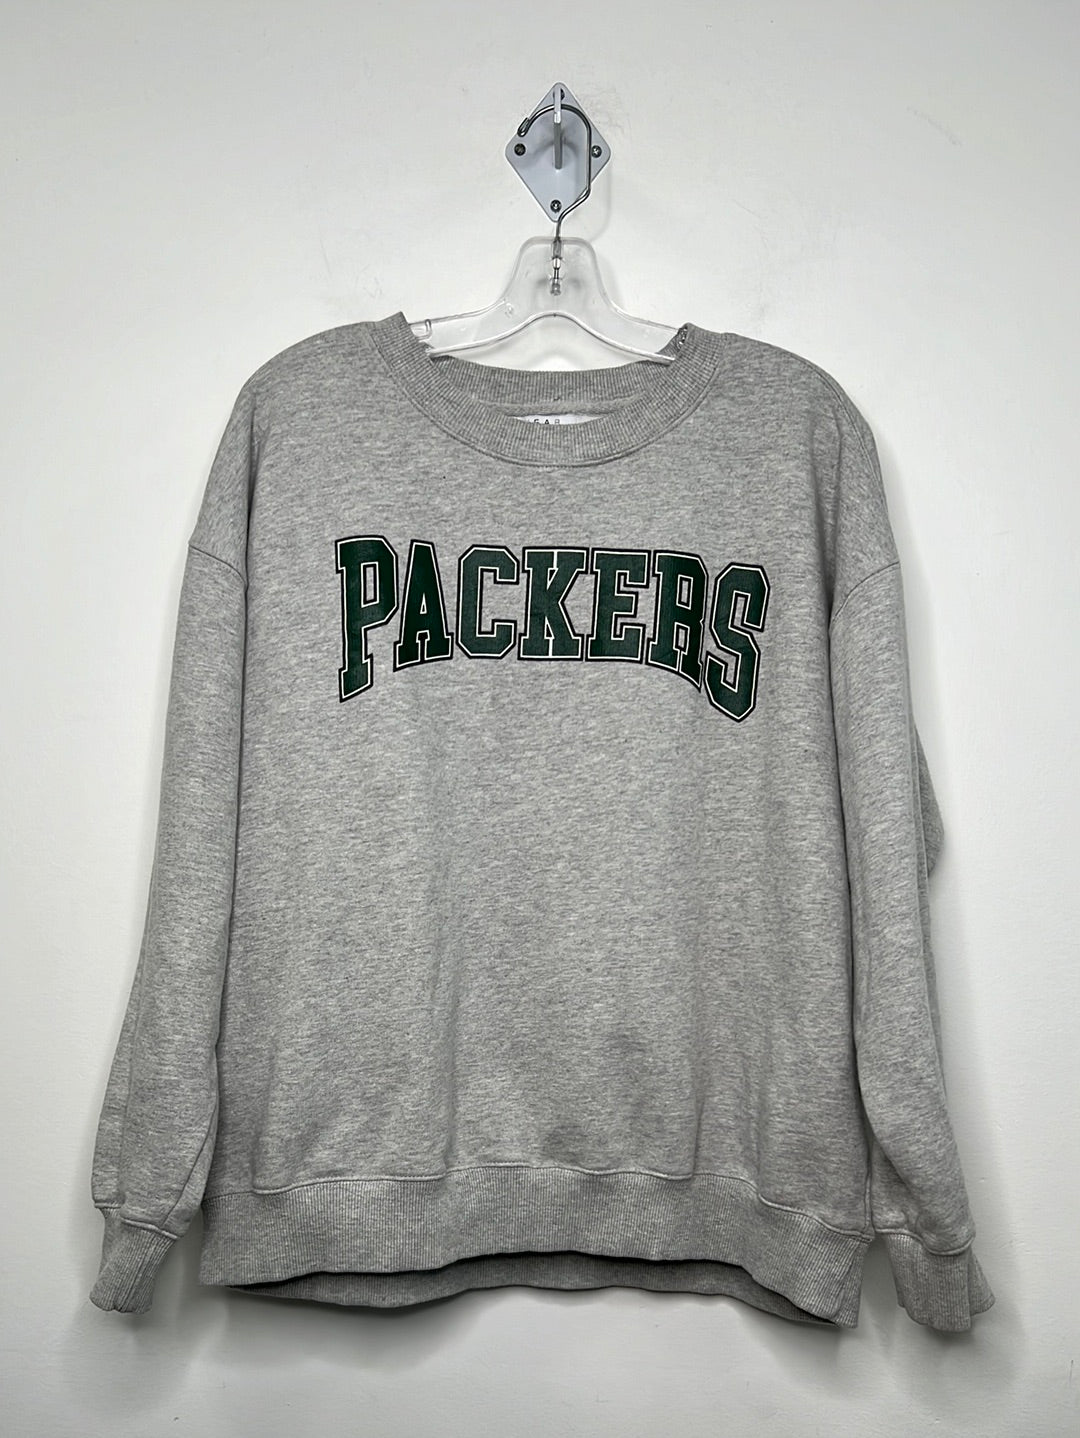 Wear by Erin Andrews "Green Bay Packers" Long Sleeve (XXL)